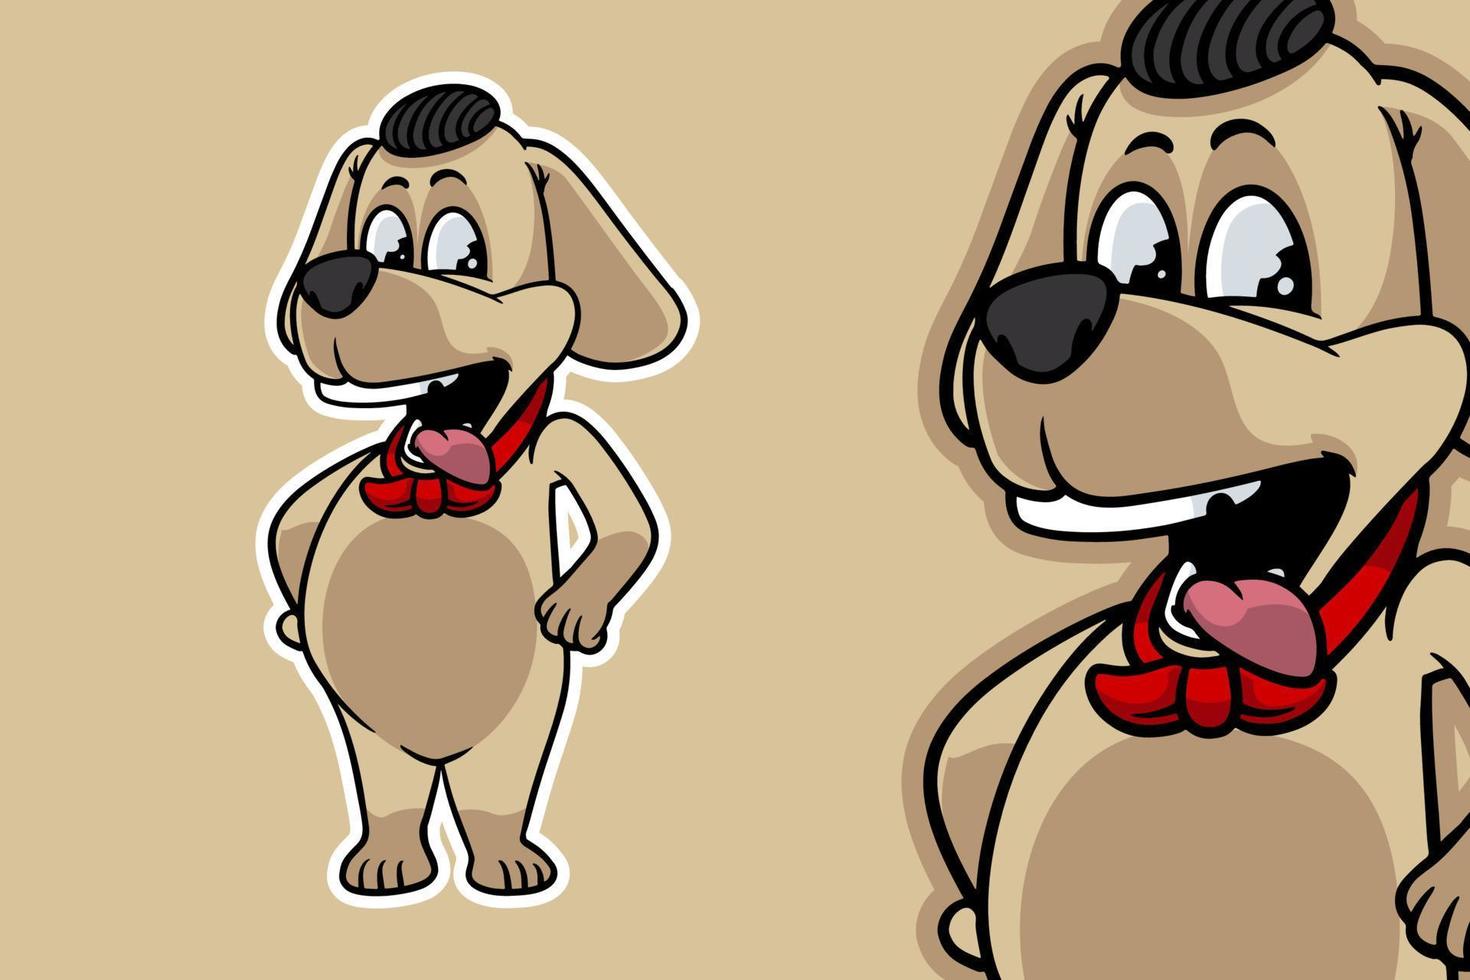 standing dog mascot vector illustration cartoon style